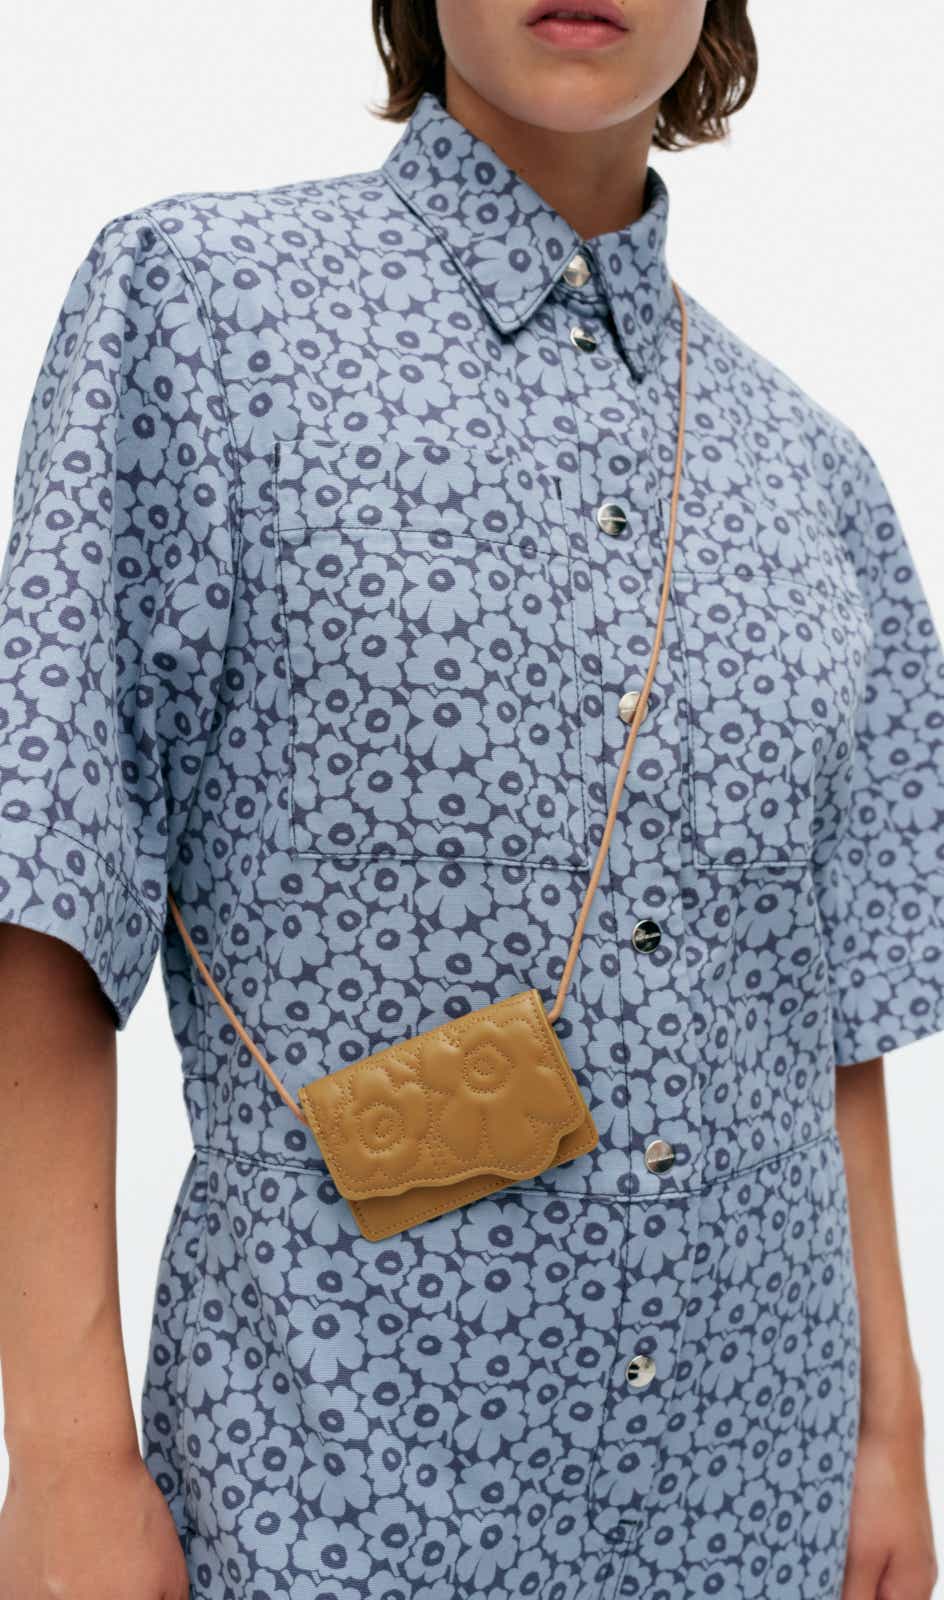 Unikko Belt Bag – 11 x 7,5 cm – leather with topstitched Unikko pattern